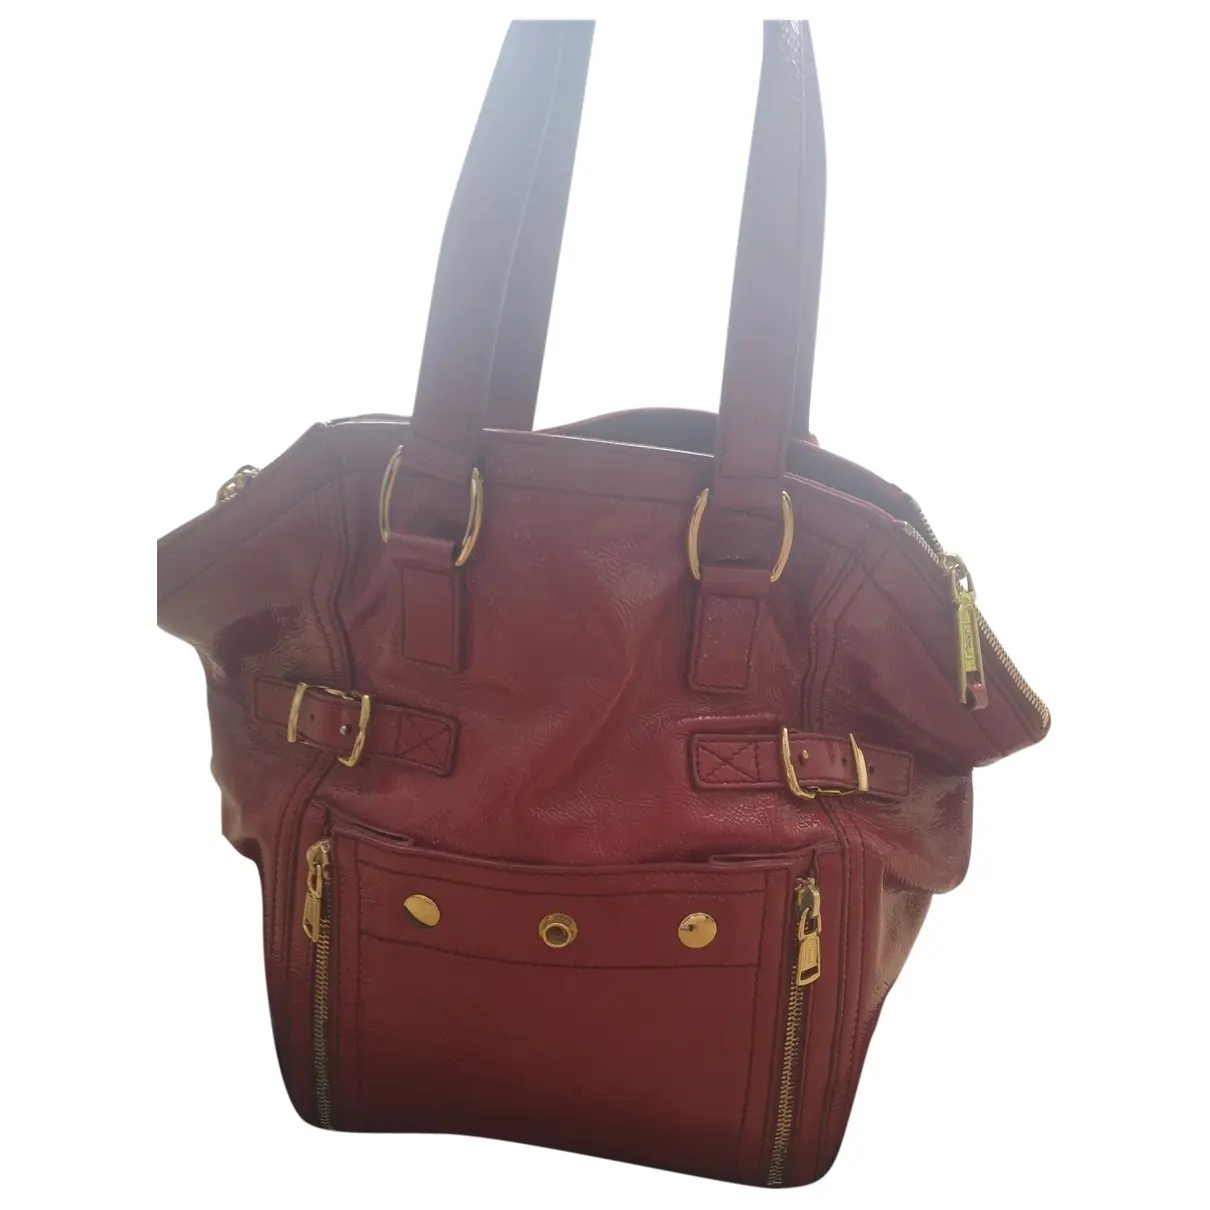 Downtown leather handbag Yves Saint Laurent